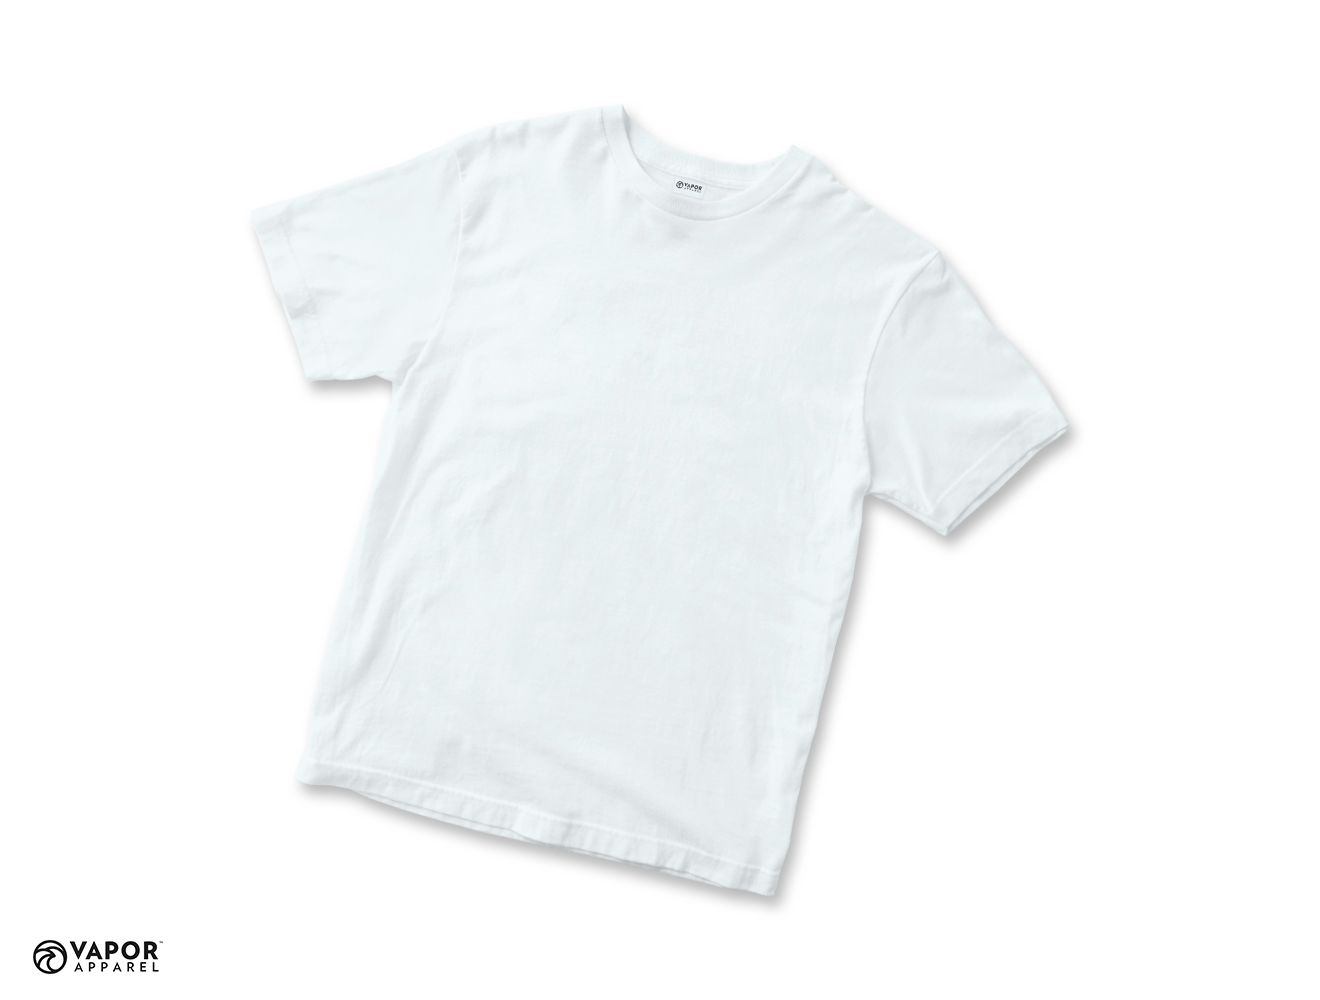 Vapor Sublimation T-Shirt for Adults size S - White